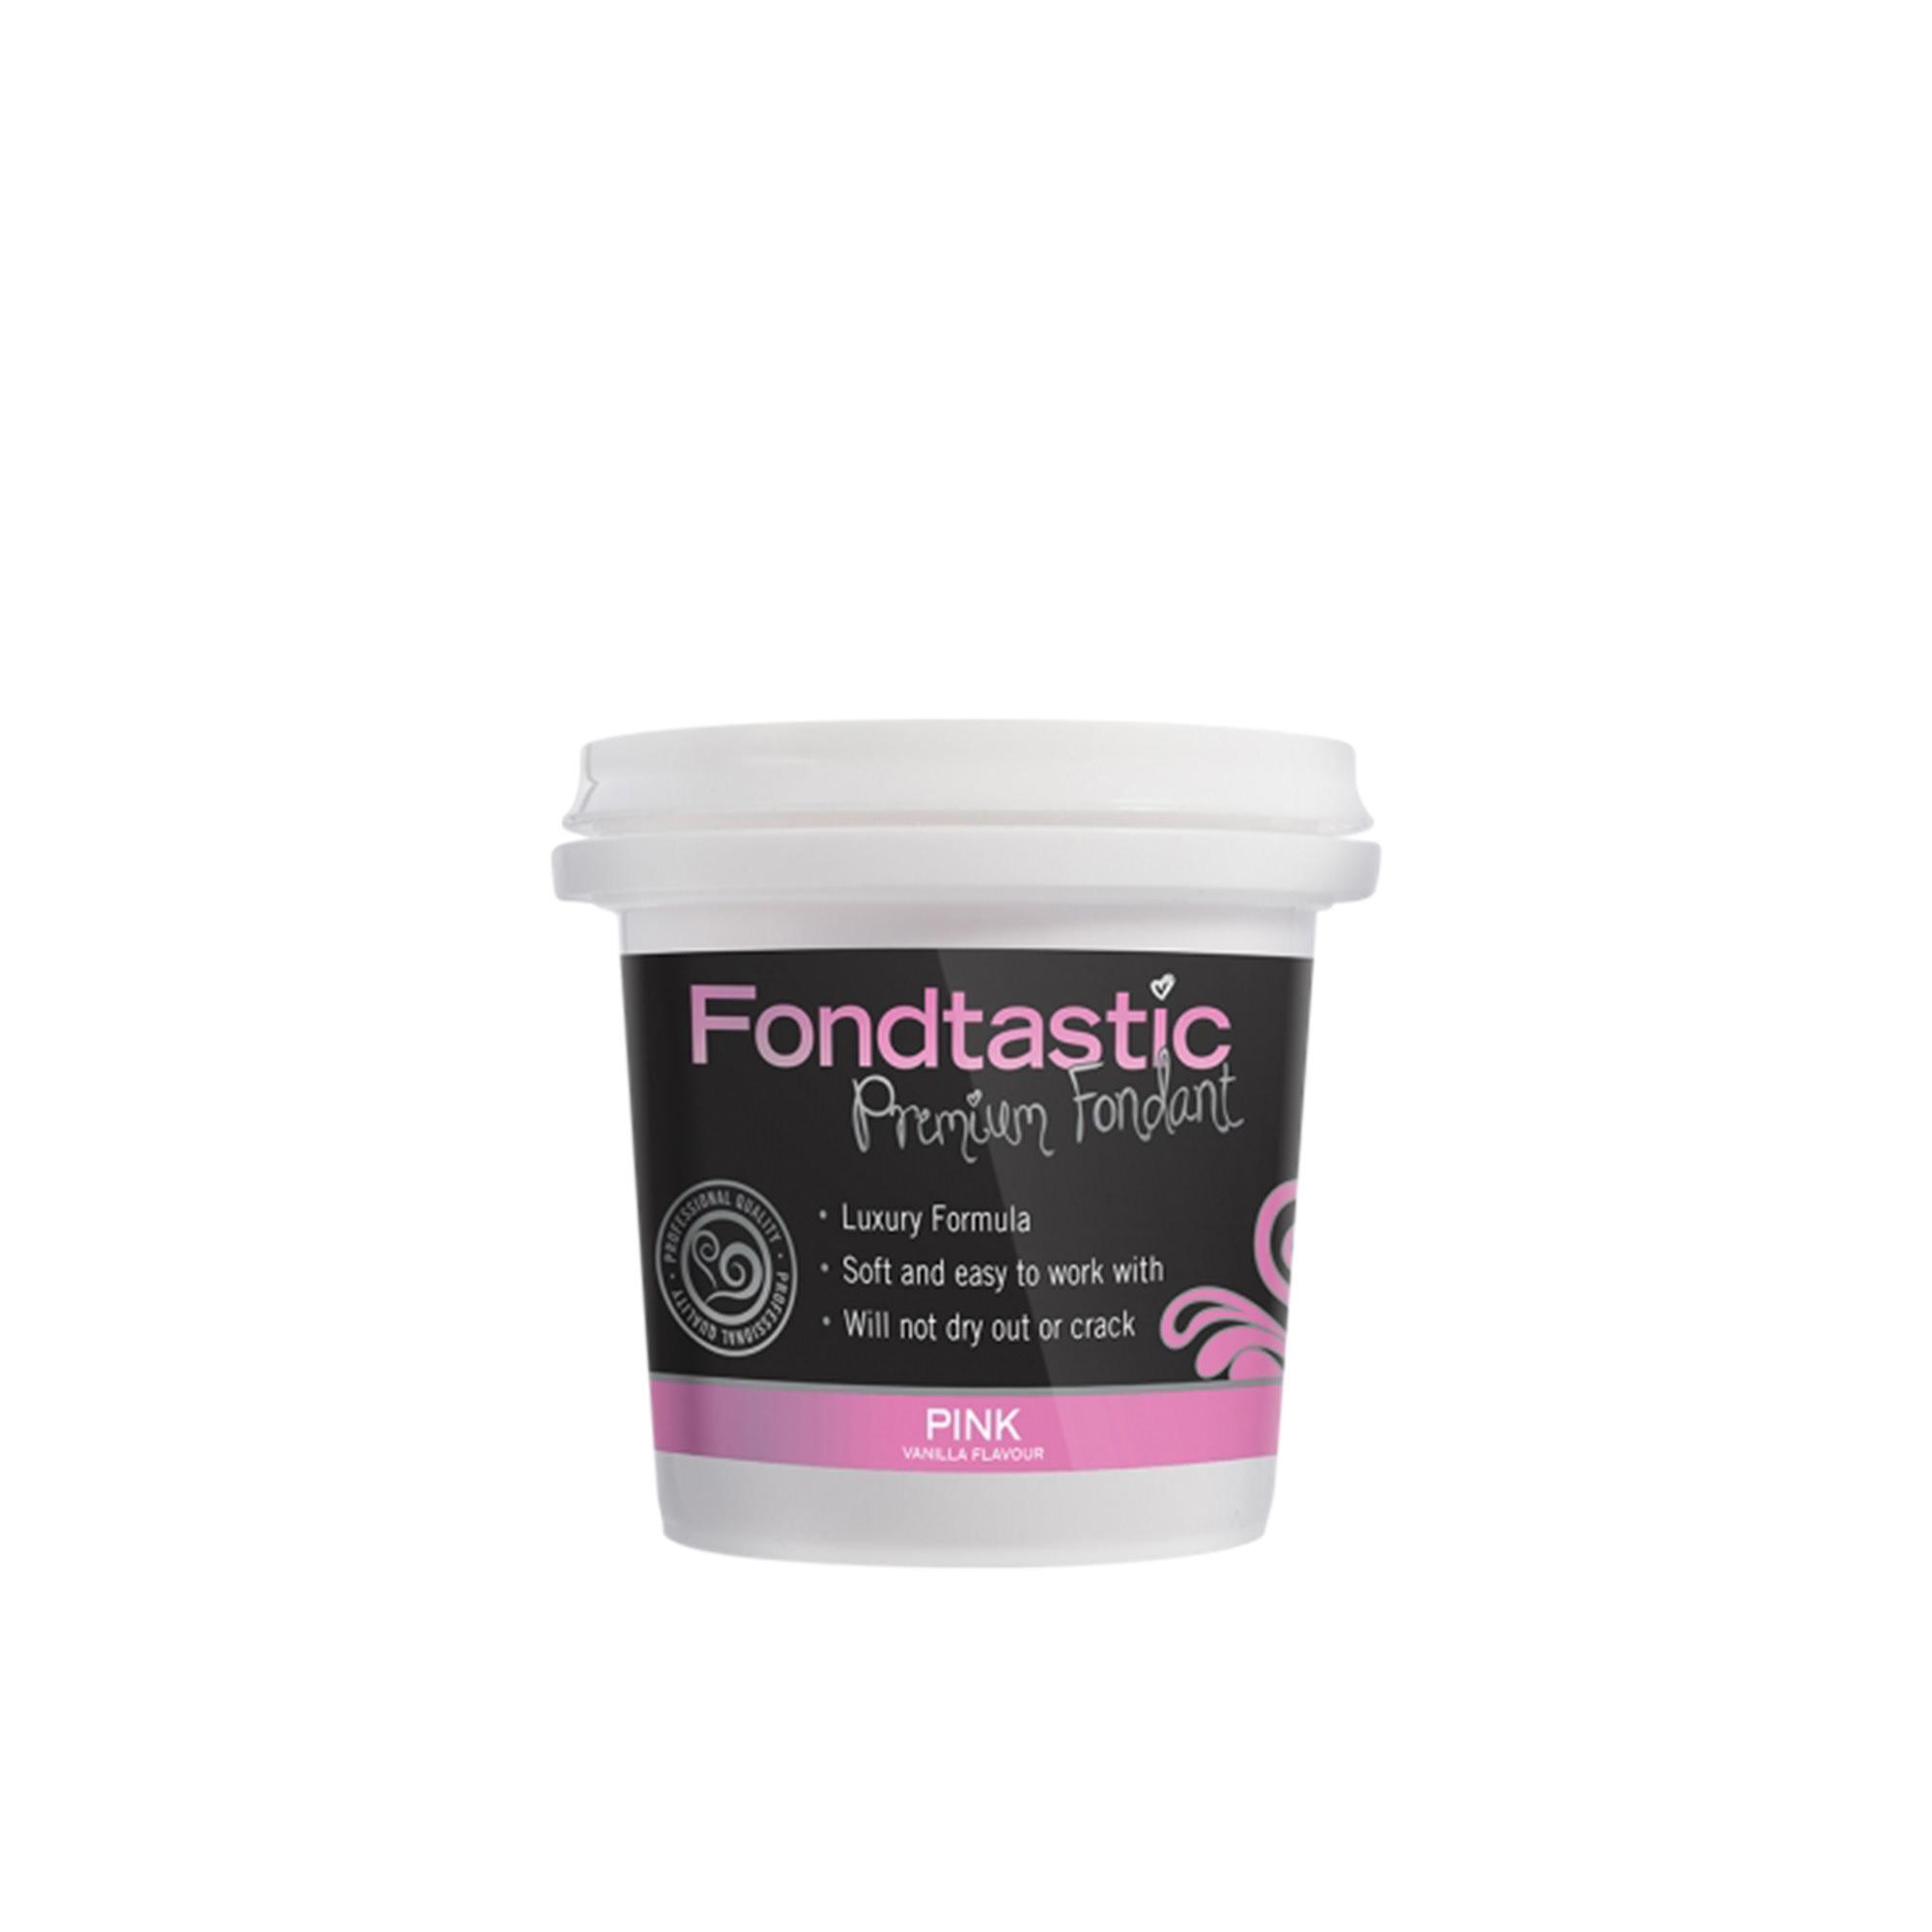 Fondtastic Premium Rolled Fondant Mini Tub Pink 225g Image 1